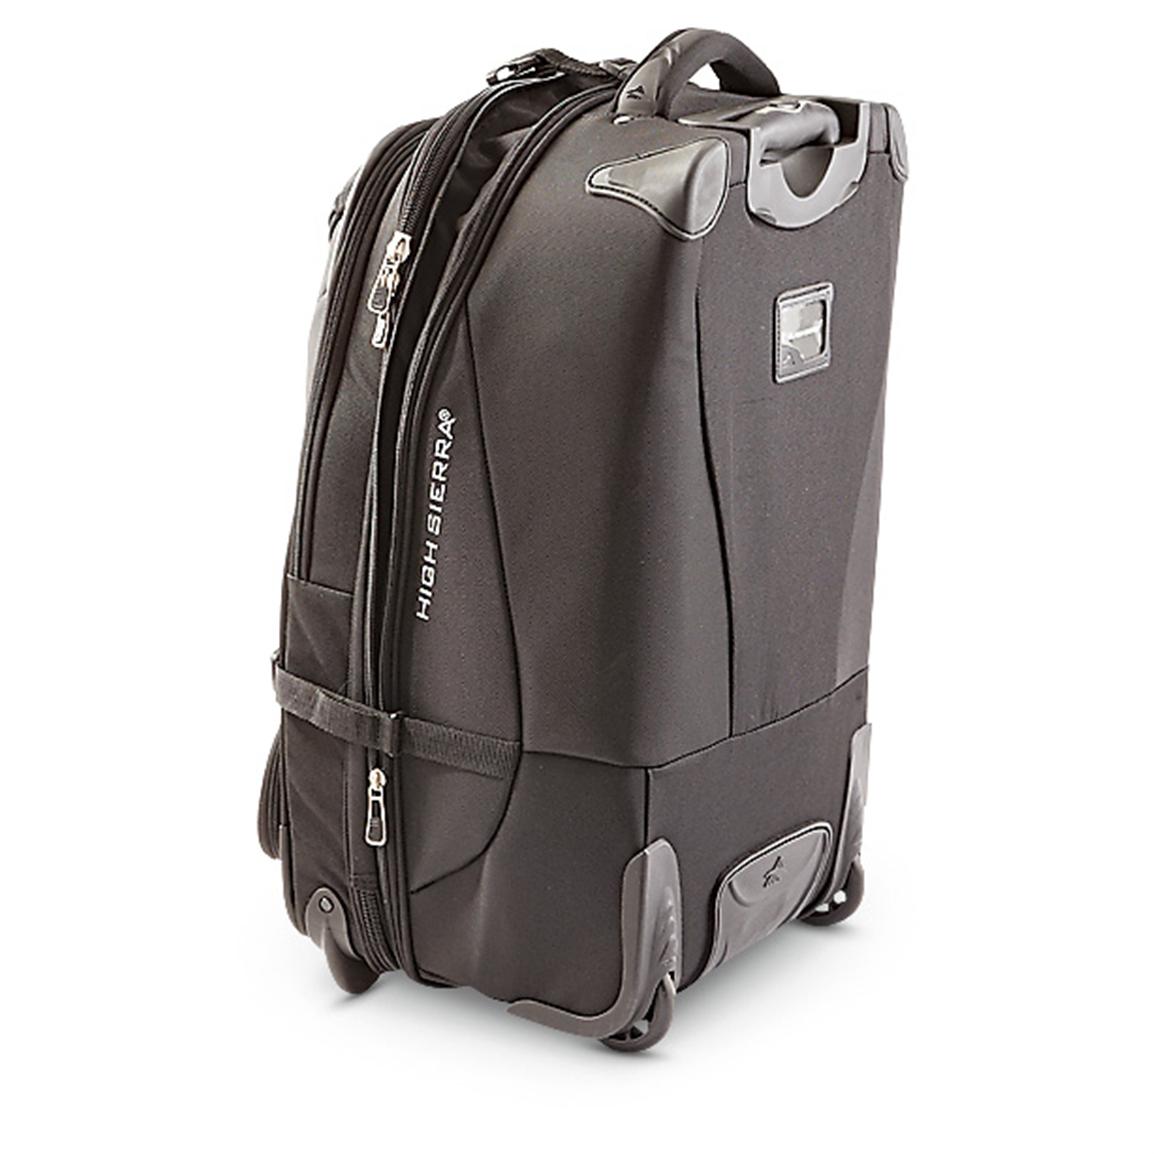 Luggage Duffle Bag On Wheels | IQS Executive